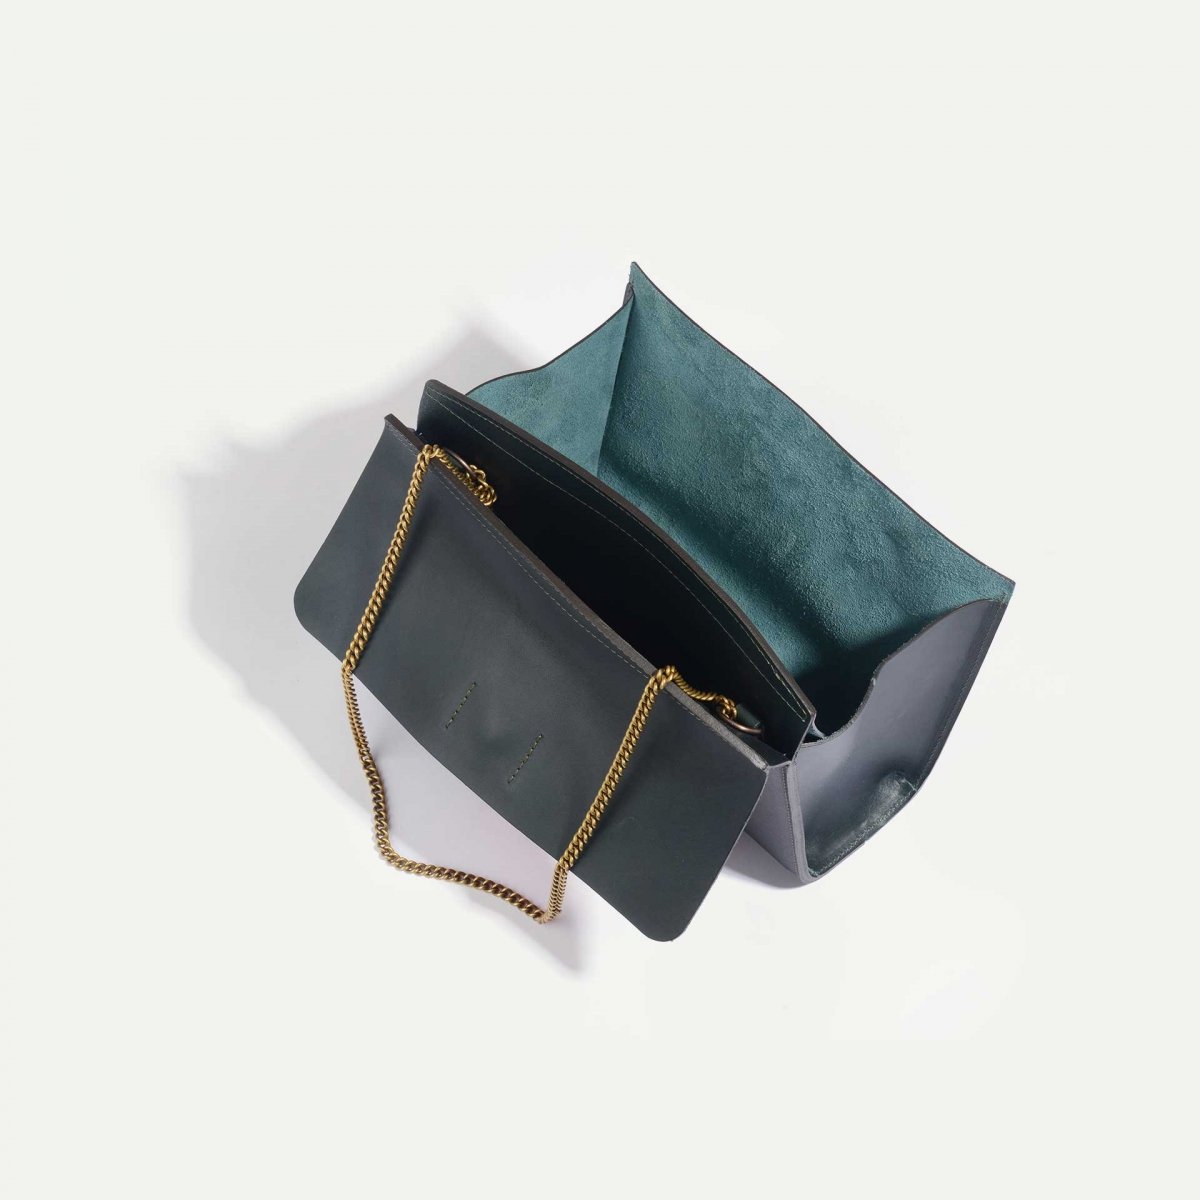 Origami S clutch bag - Peacock blue (image n°5)